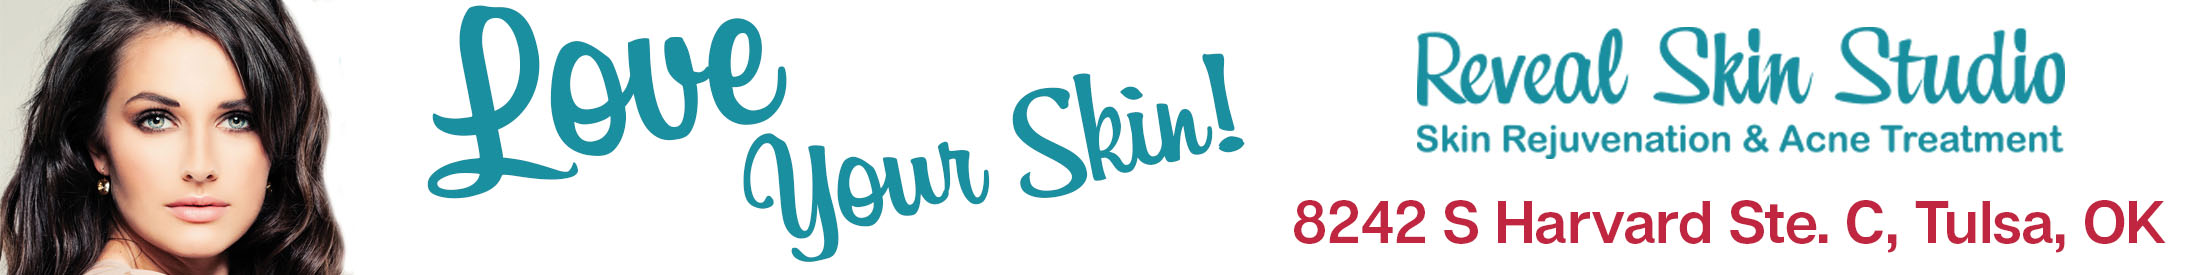 Image of Reveal Skin Studio Ad